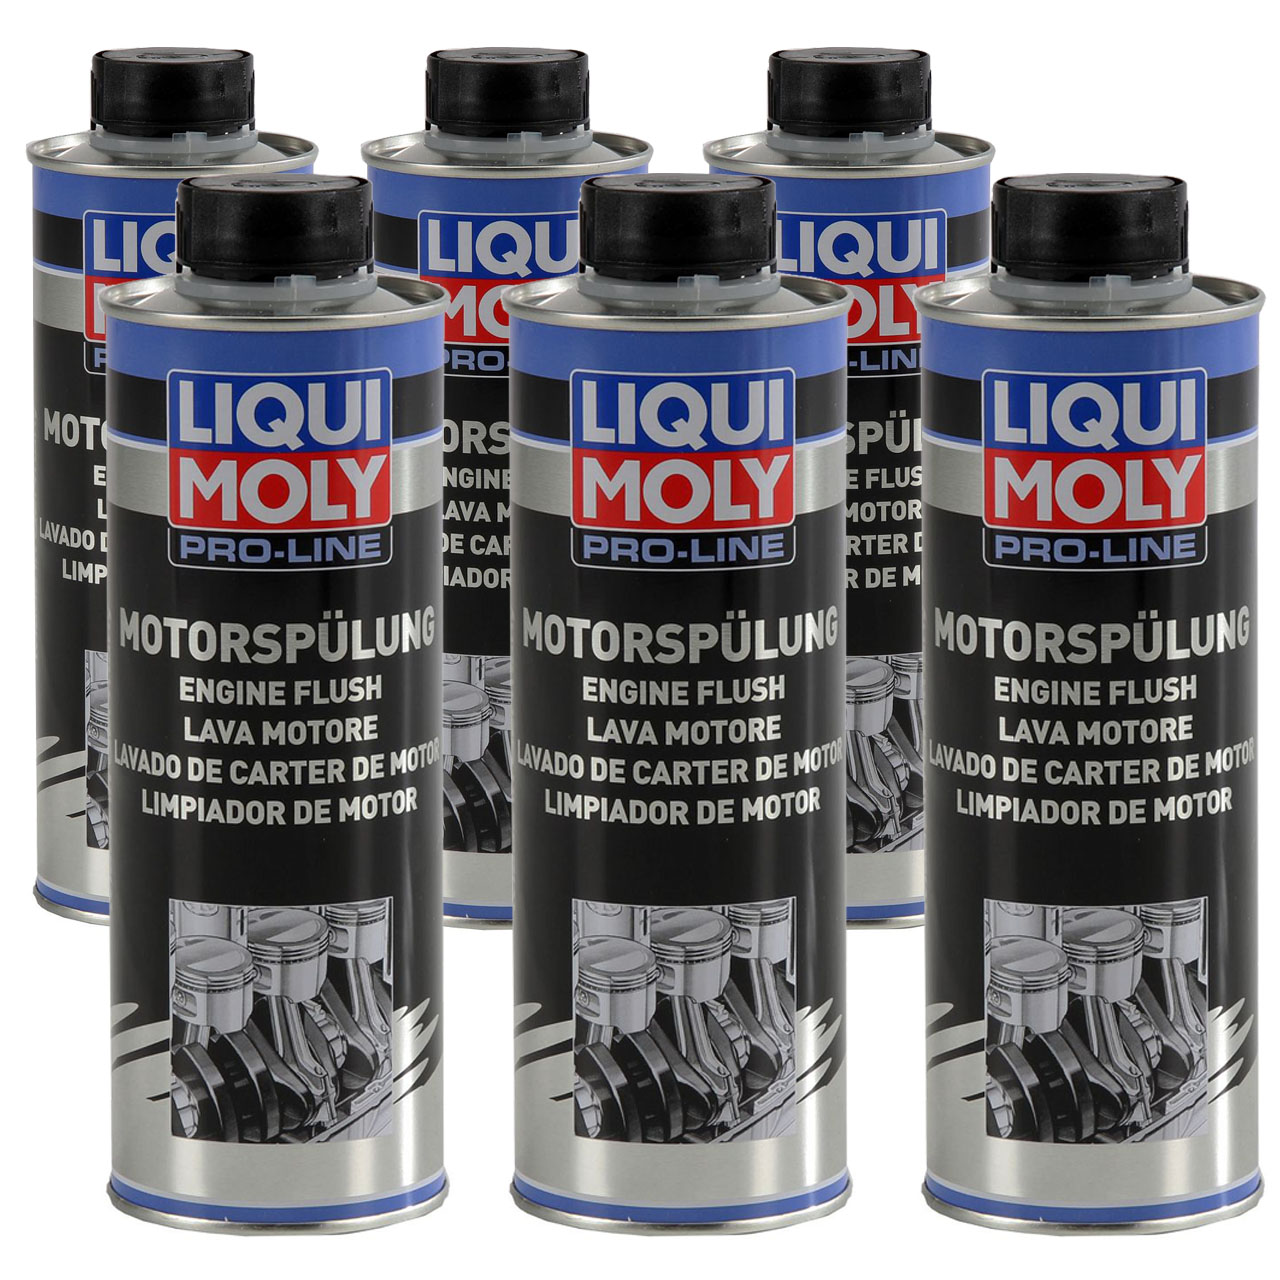 LIQUI MOLY Kraftstoff-Additive / Motoröl-Additive - 2427 